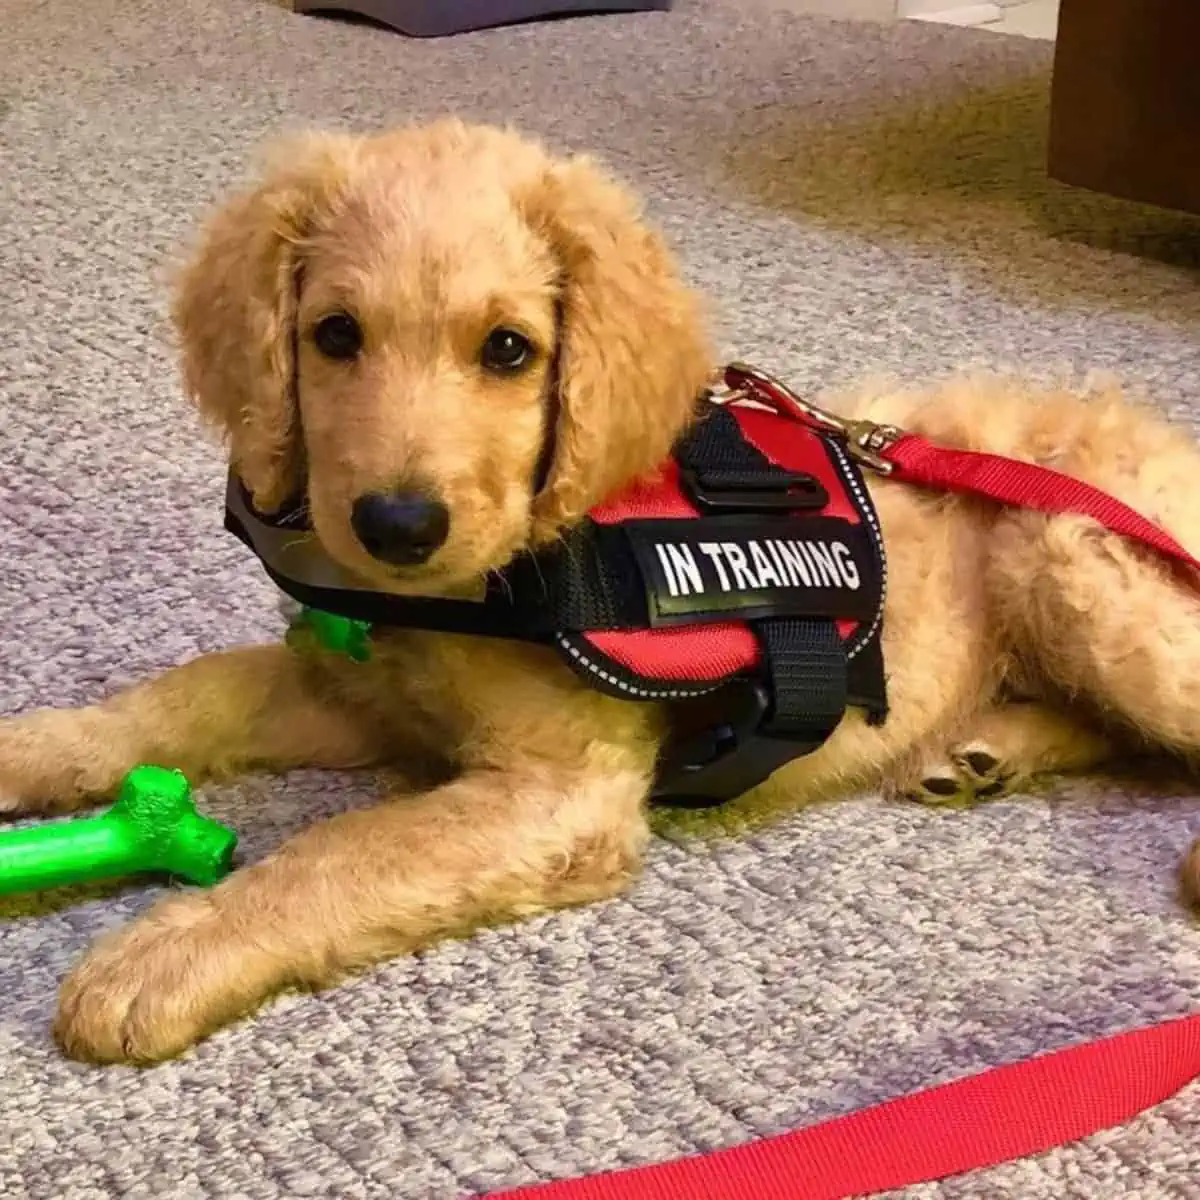 puppy service dog training